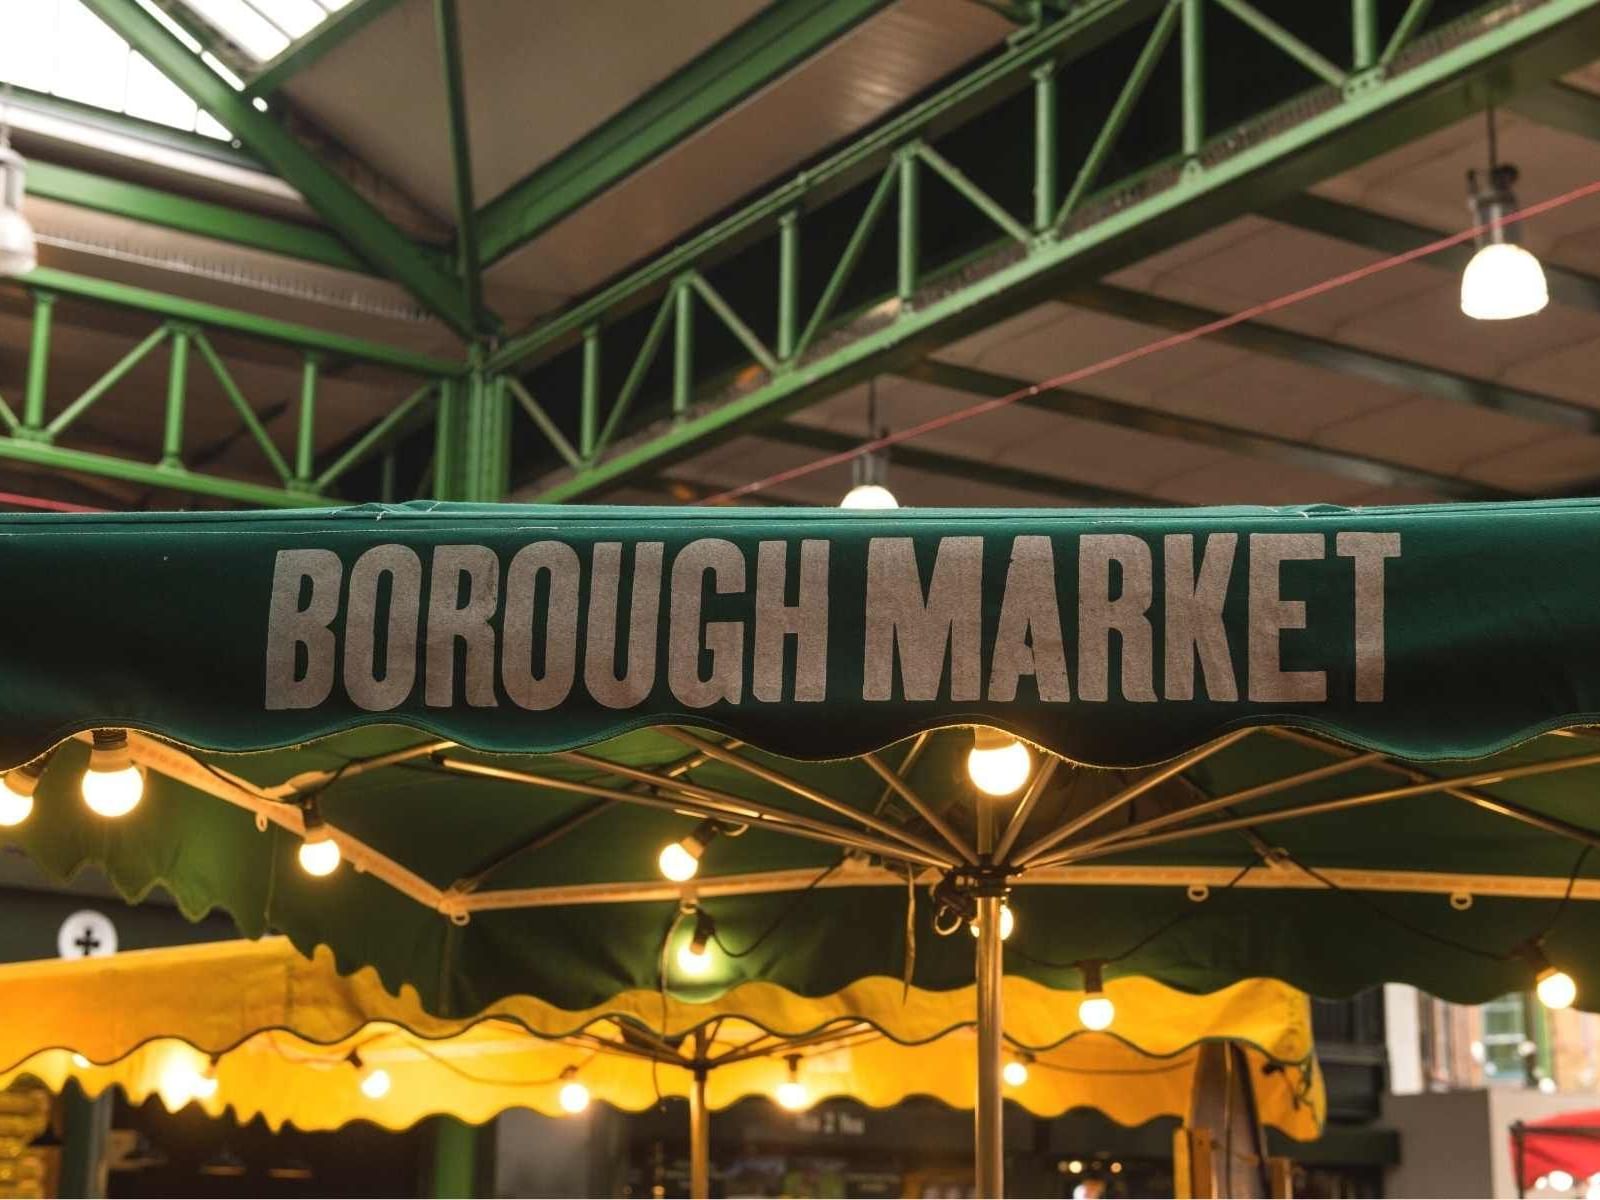  Borough Market a historic market in central London